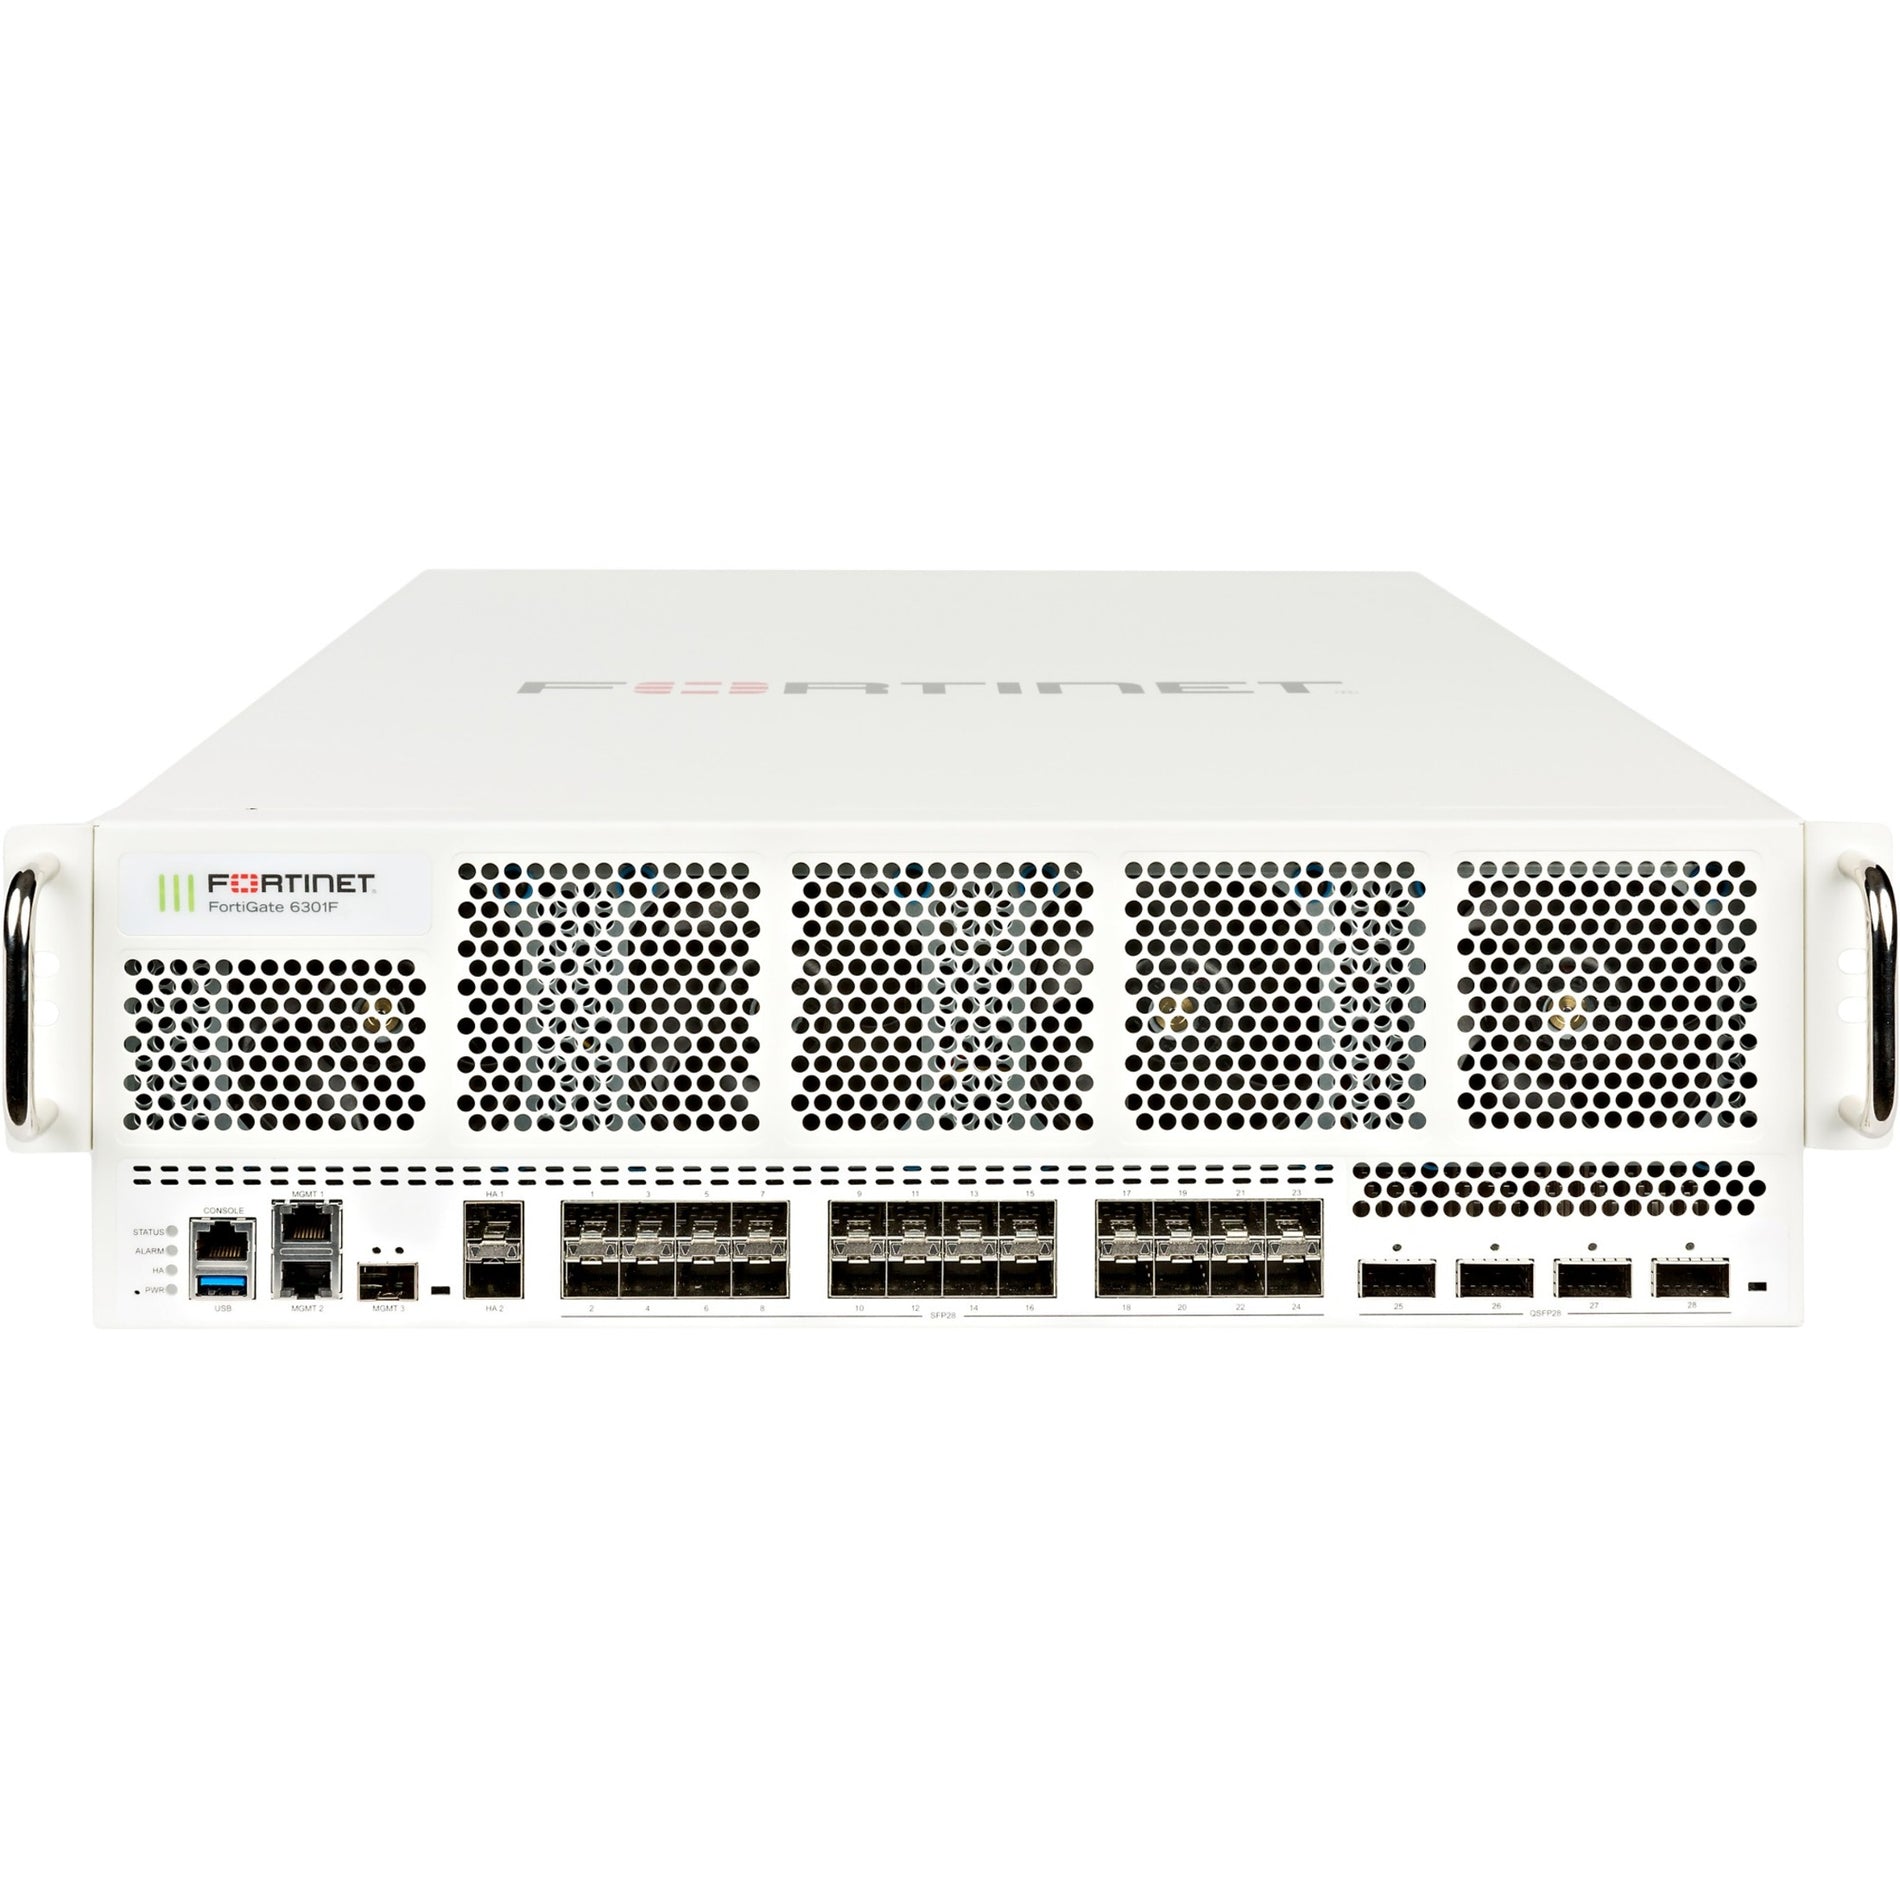 Fortinet FG-6301F-DC FortiGate Network Security/Firewall Appliance, 10GBase-X, 100 Gigabit Ethernet, 3U Rack-mountable